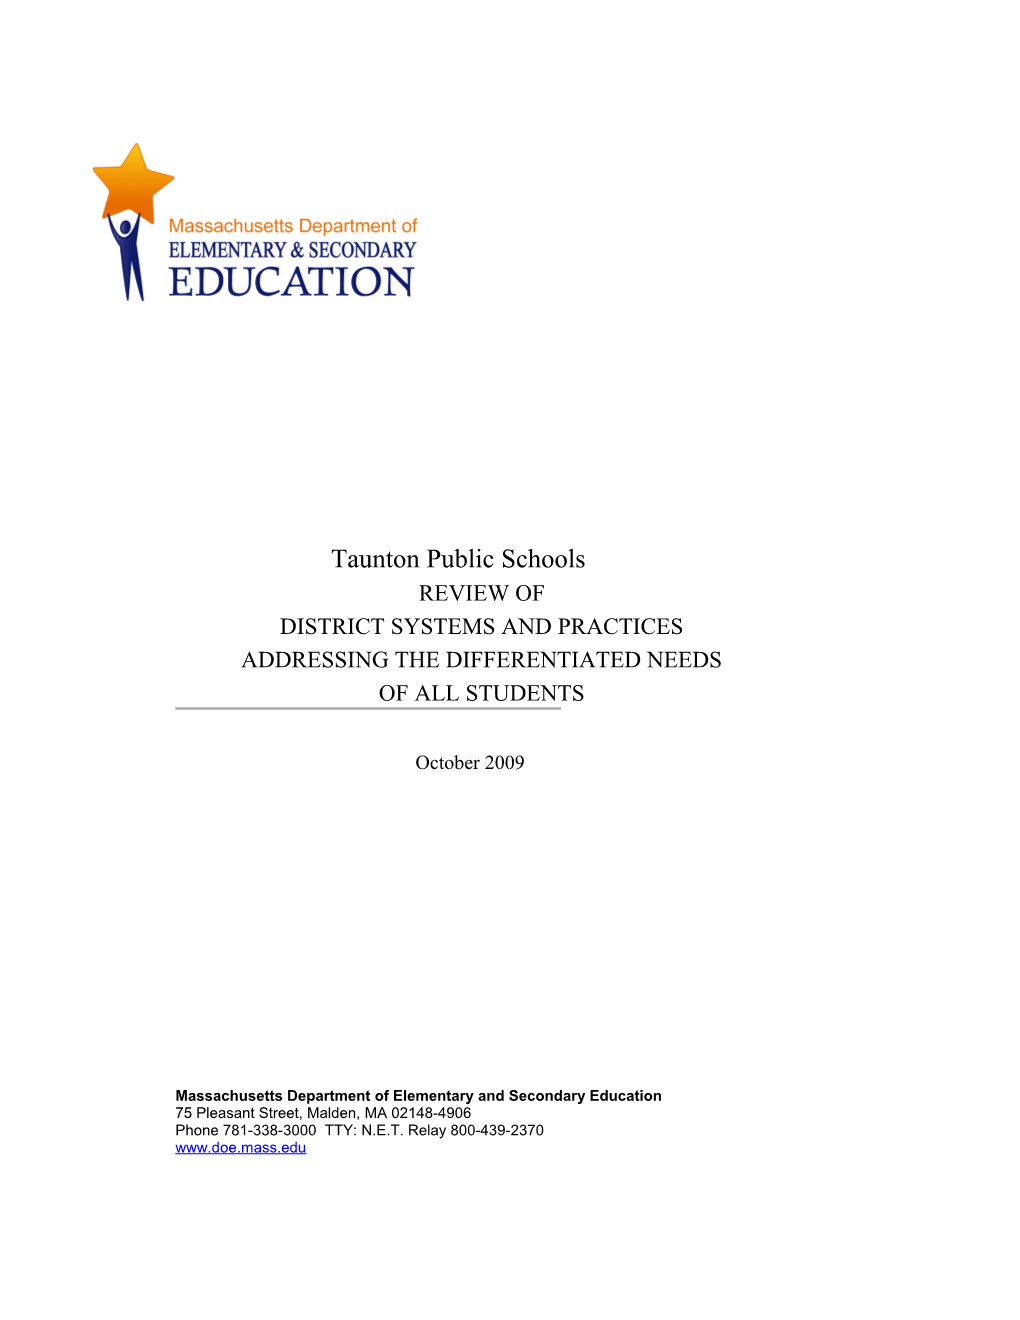 Taunton Public Schools Differentiated Needs Review Report, October 2009